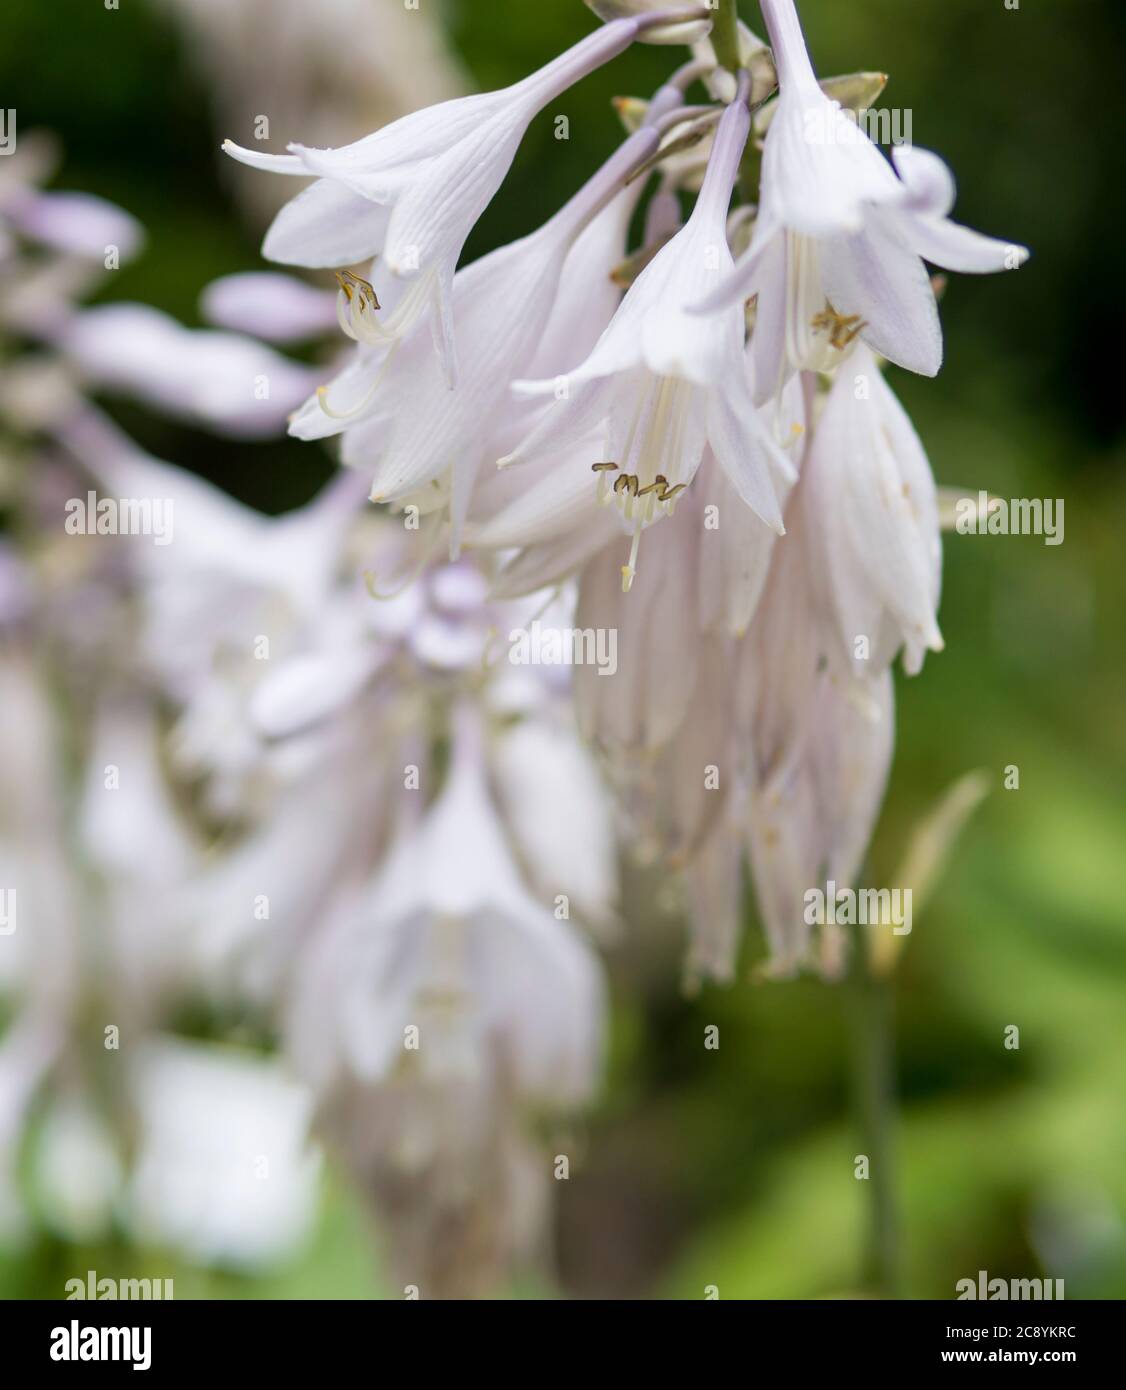 detail of Aruncus aethusifolius growing in a garden during summer season Stock Photo